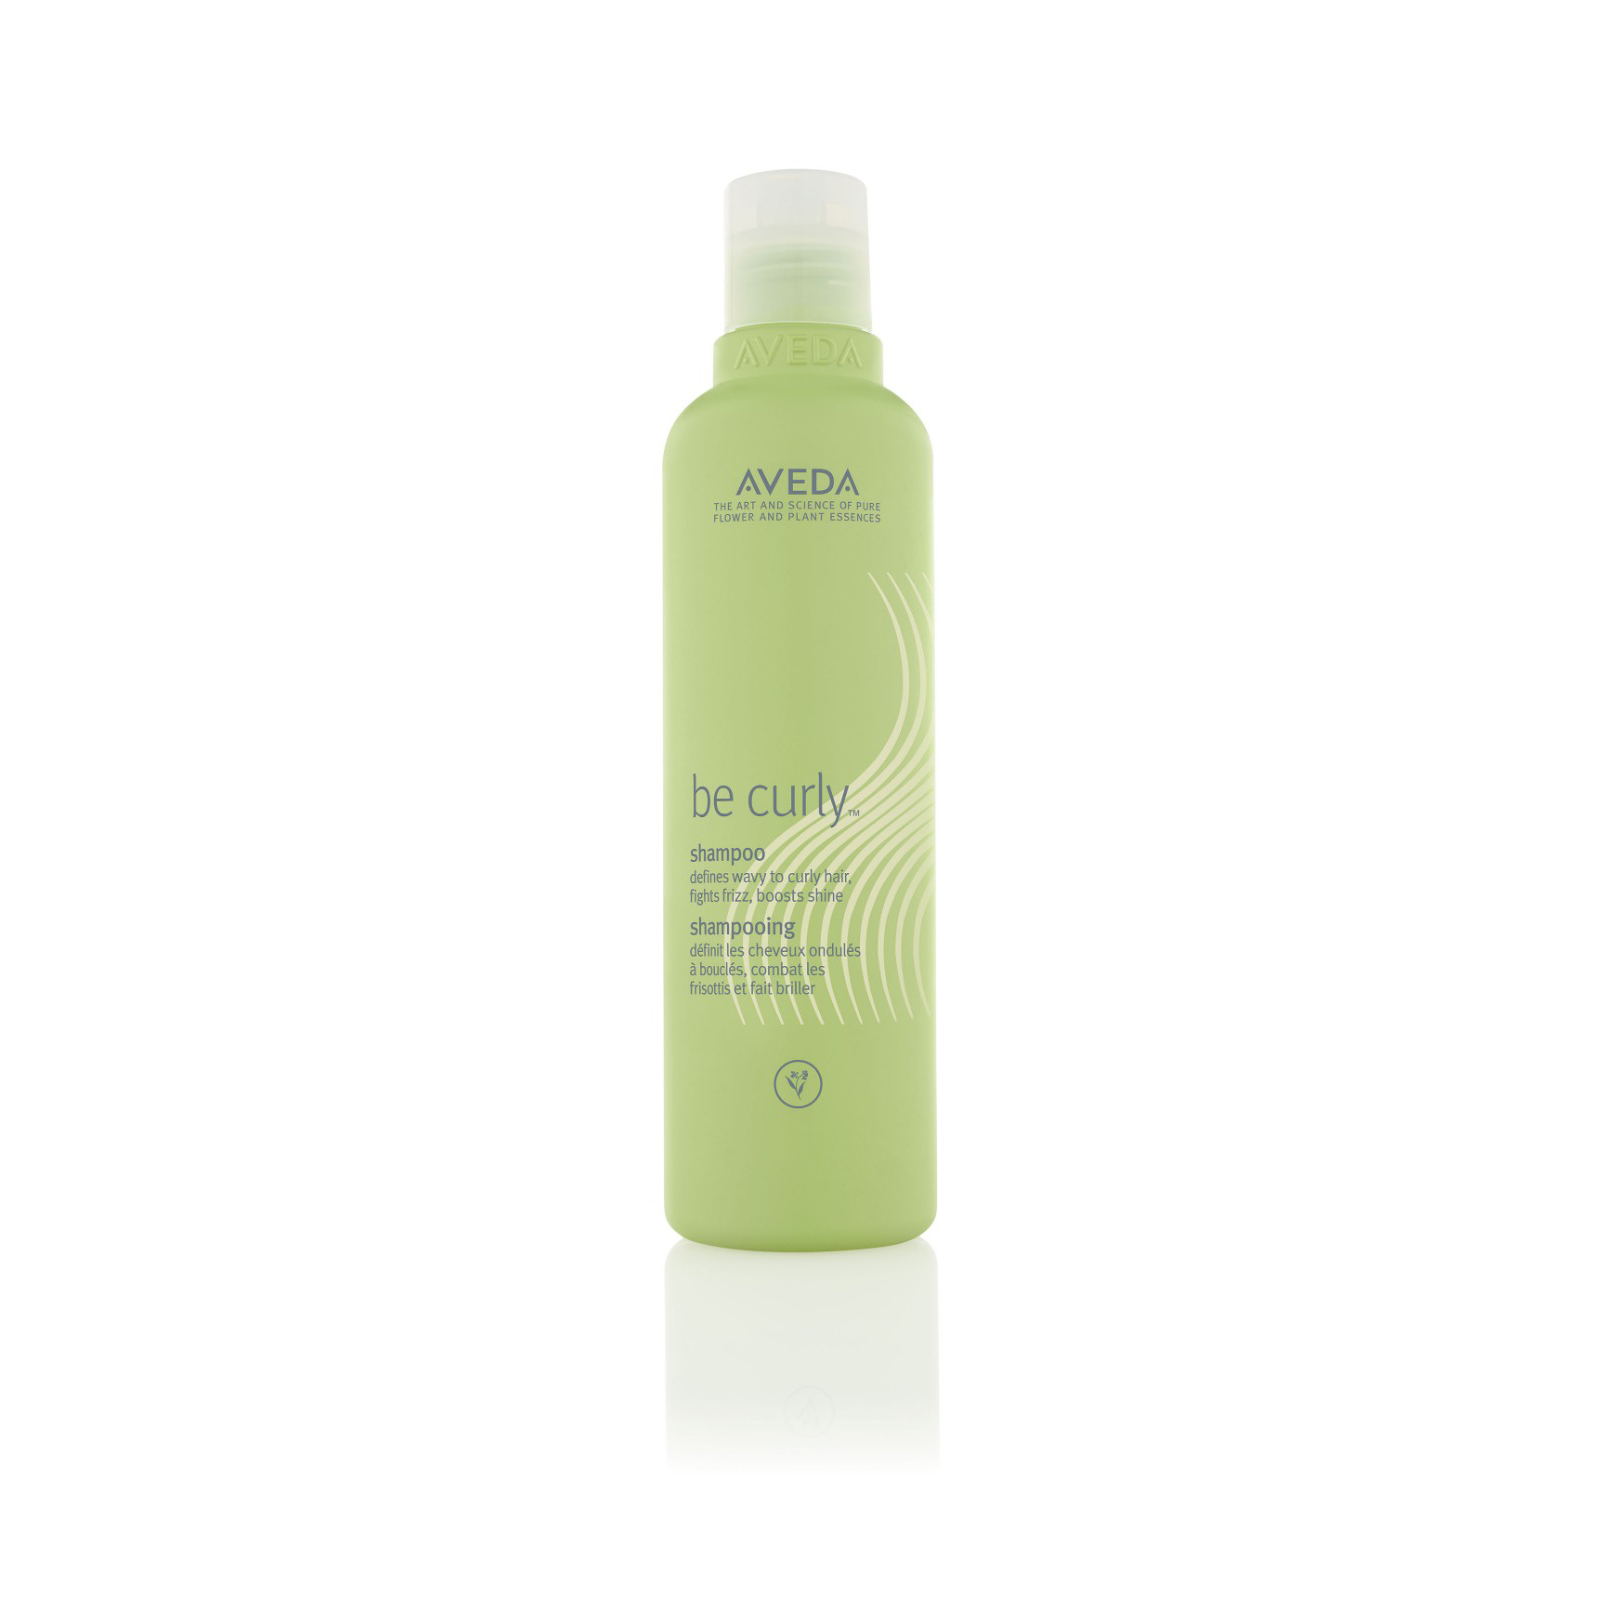 Curly™ shampoo ml of ml | AV-DASHOP.nl